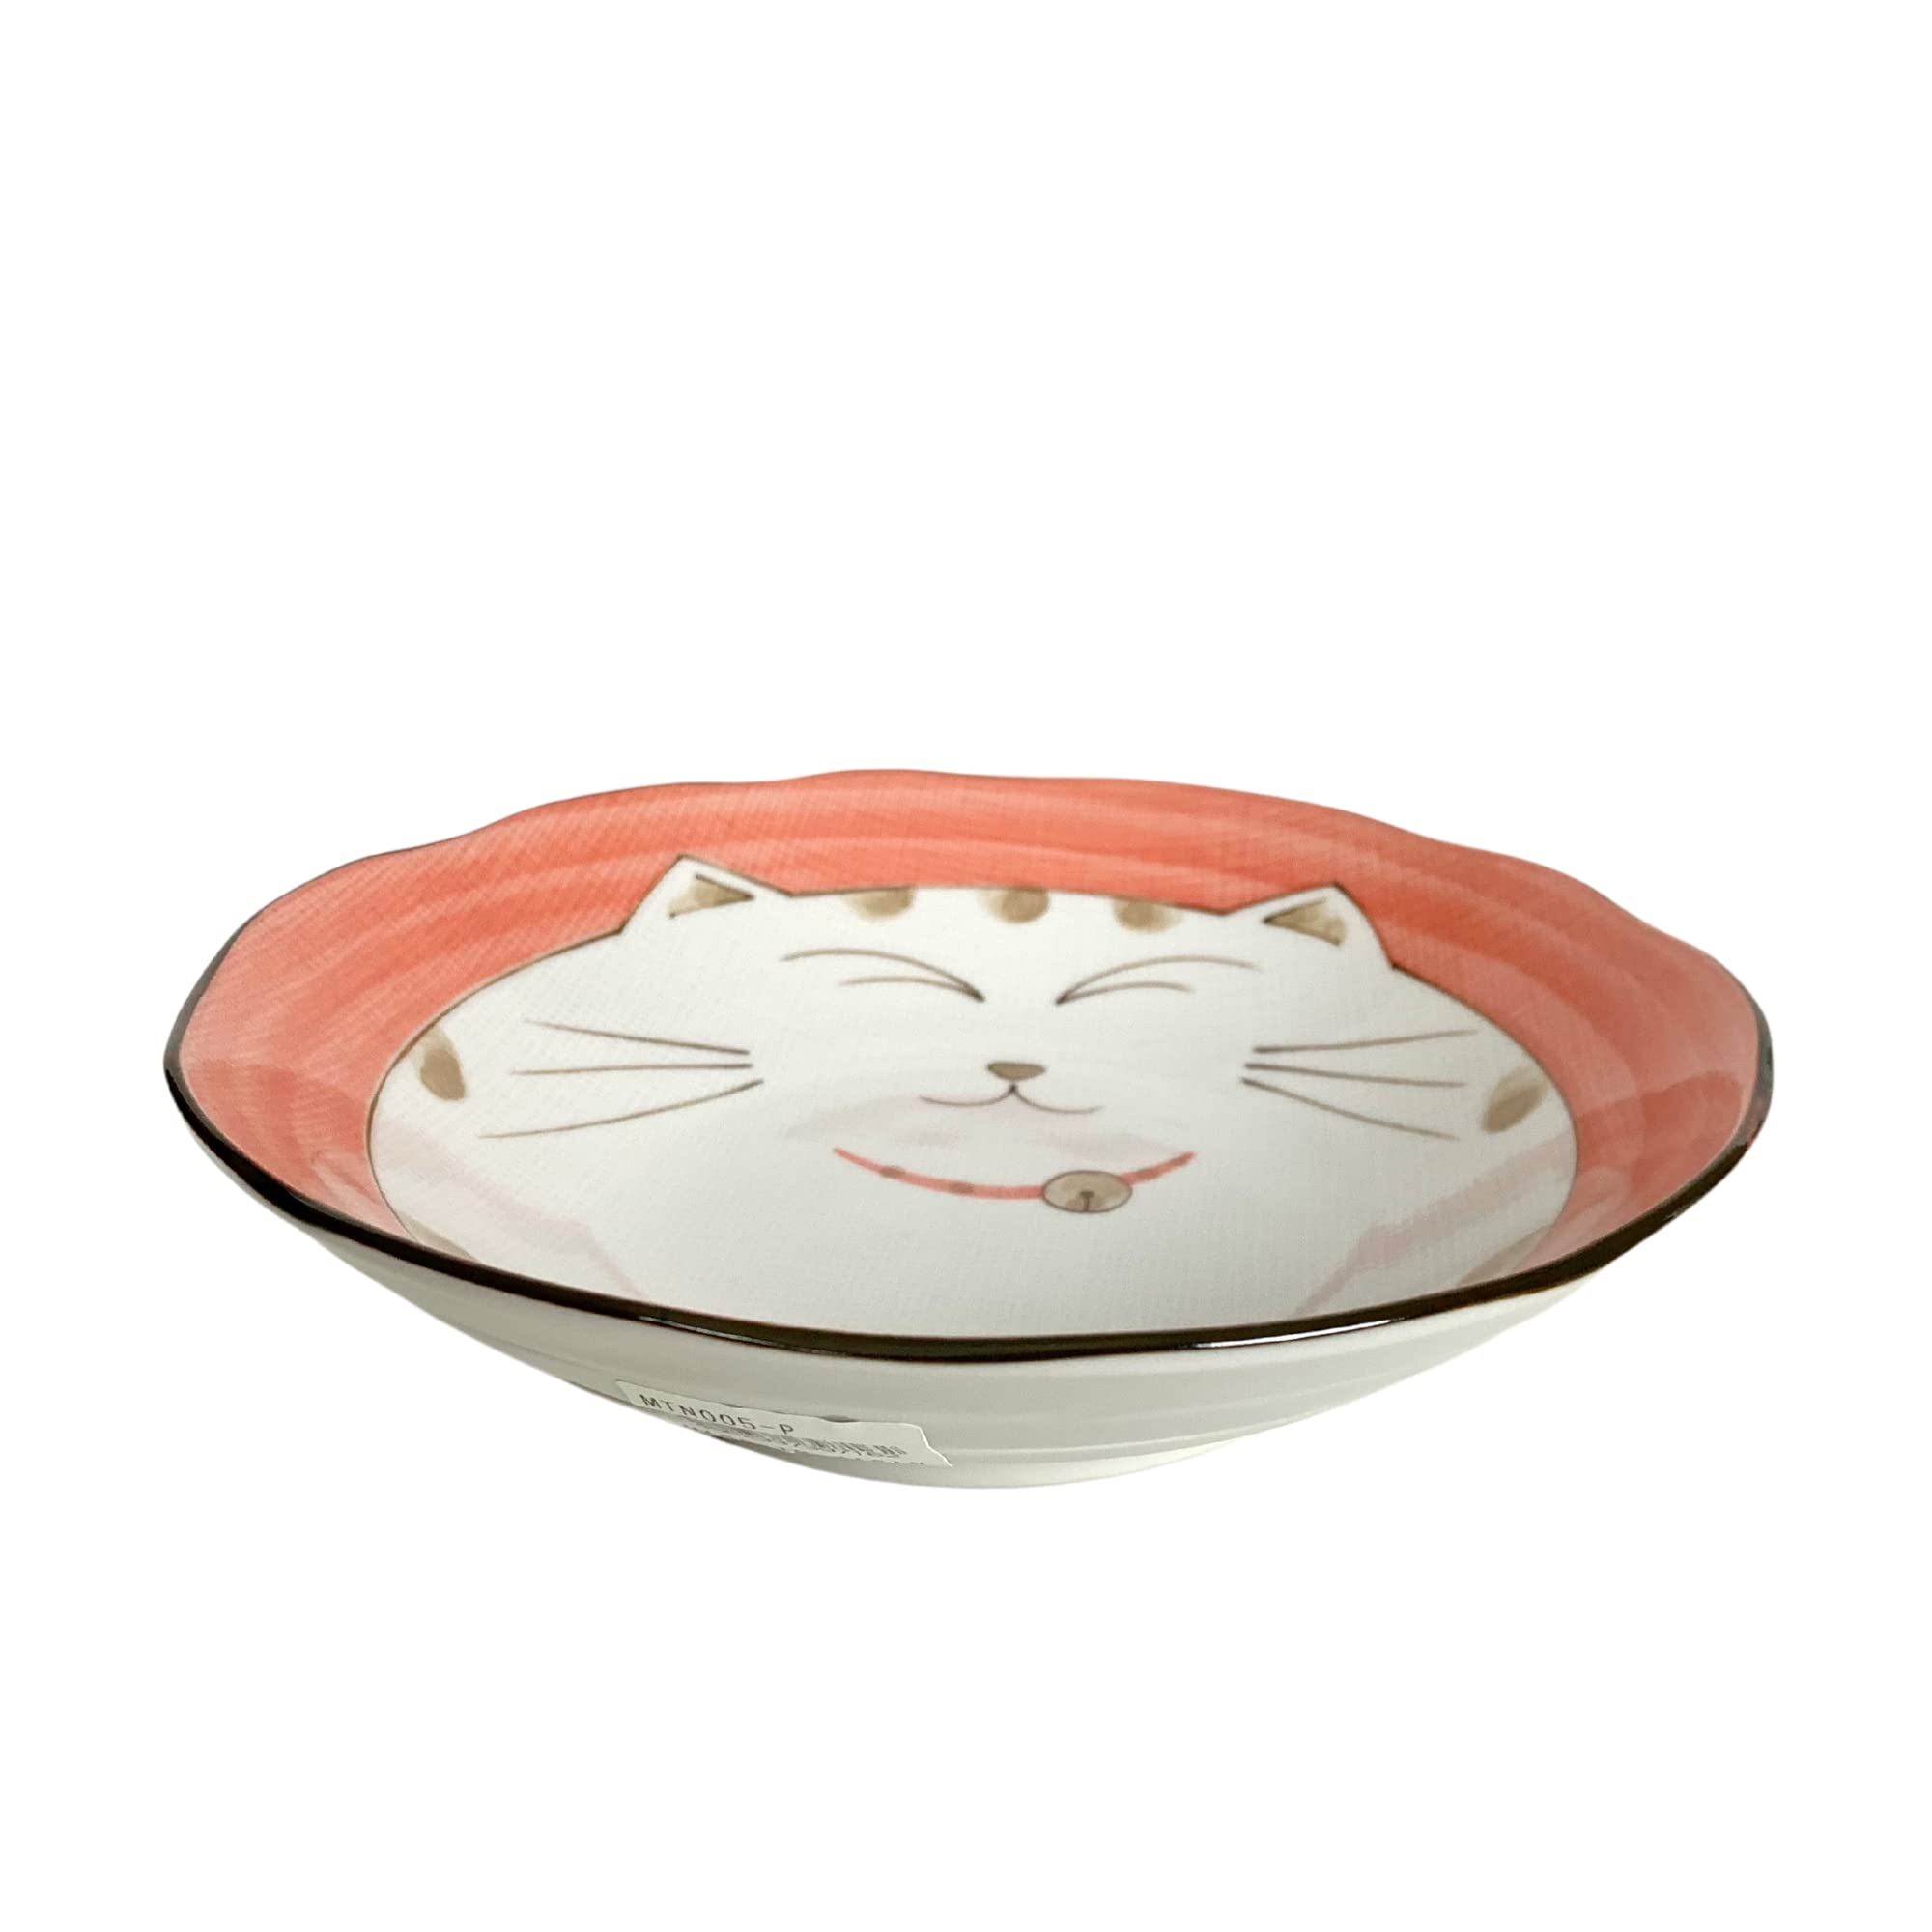 JapanBargain 2479, Japanese Porcelain Shallow Soup Bowl for Dinner Lunch Rice Poke Donburi Udon Ramen Noodle Pasta Cereal Maneki Neko Lucky Cat Pattern for Cat Lovers Made in Japan, 8.5-inch, Pink